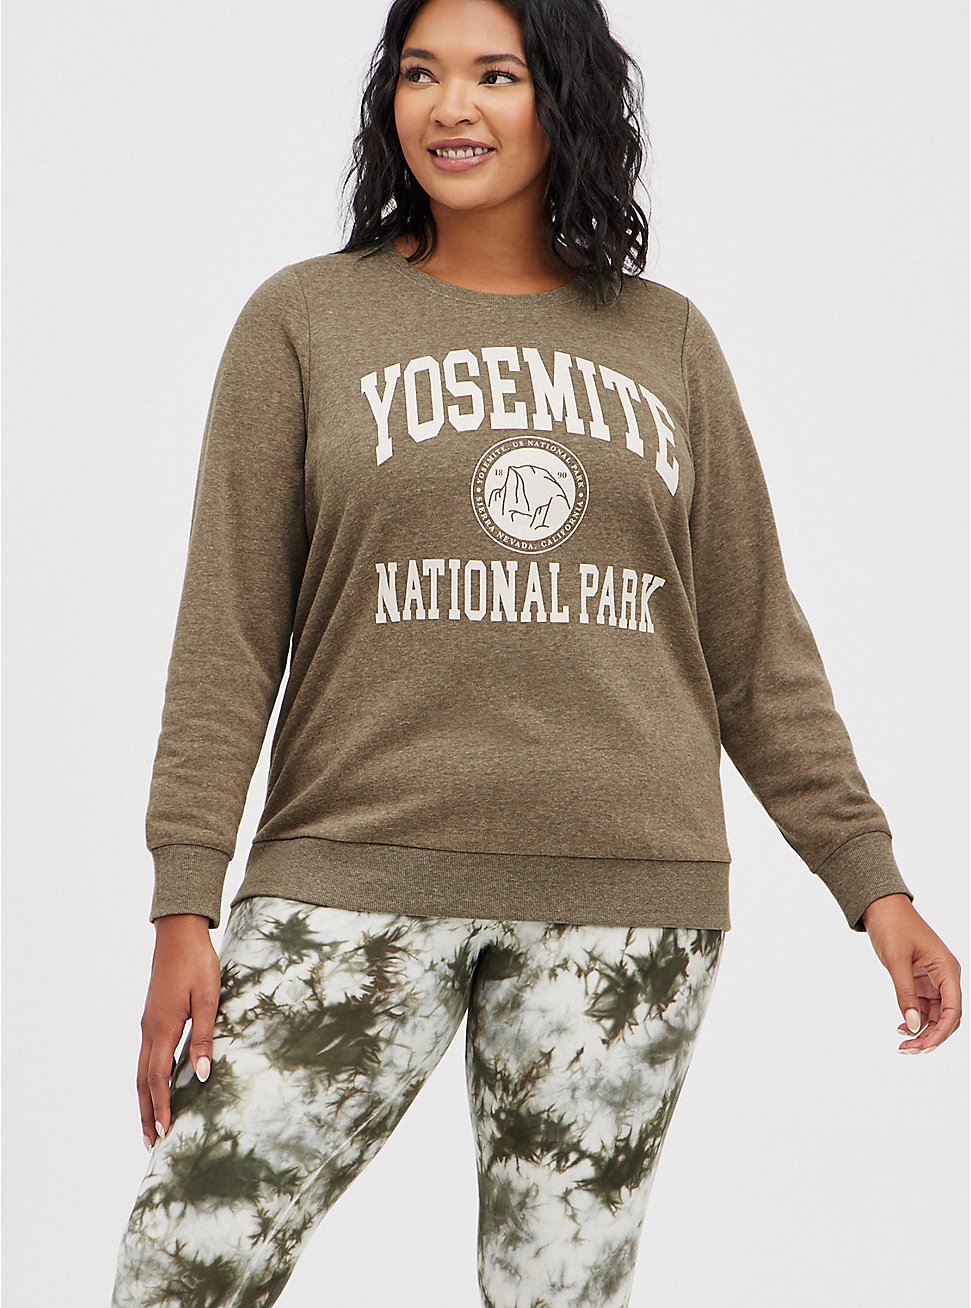 Plus Size Sweatshirt - Cozy Fleece Yosemite Dusty Olive, DEEP DEPTHS, hi-res